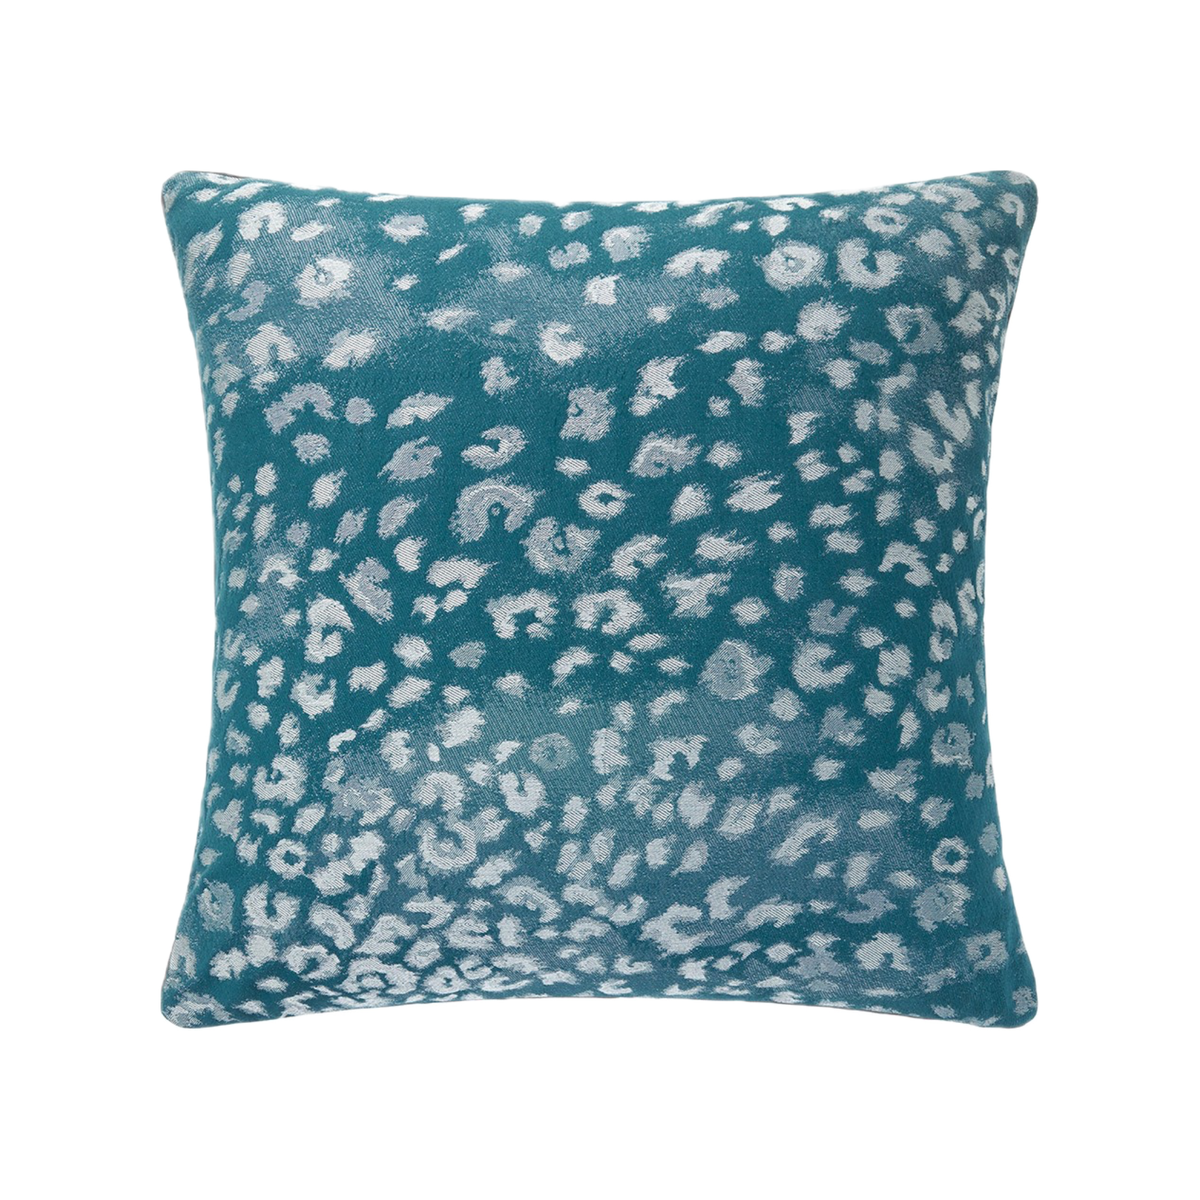 Decorative Pillow of Yves Delorme Tioman Bedding in Encre Color